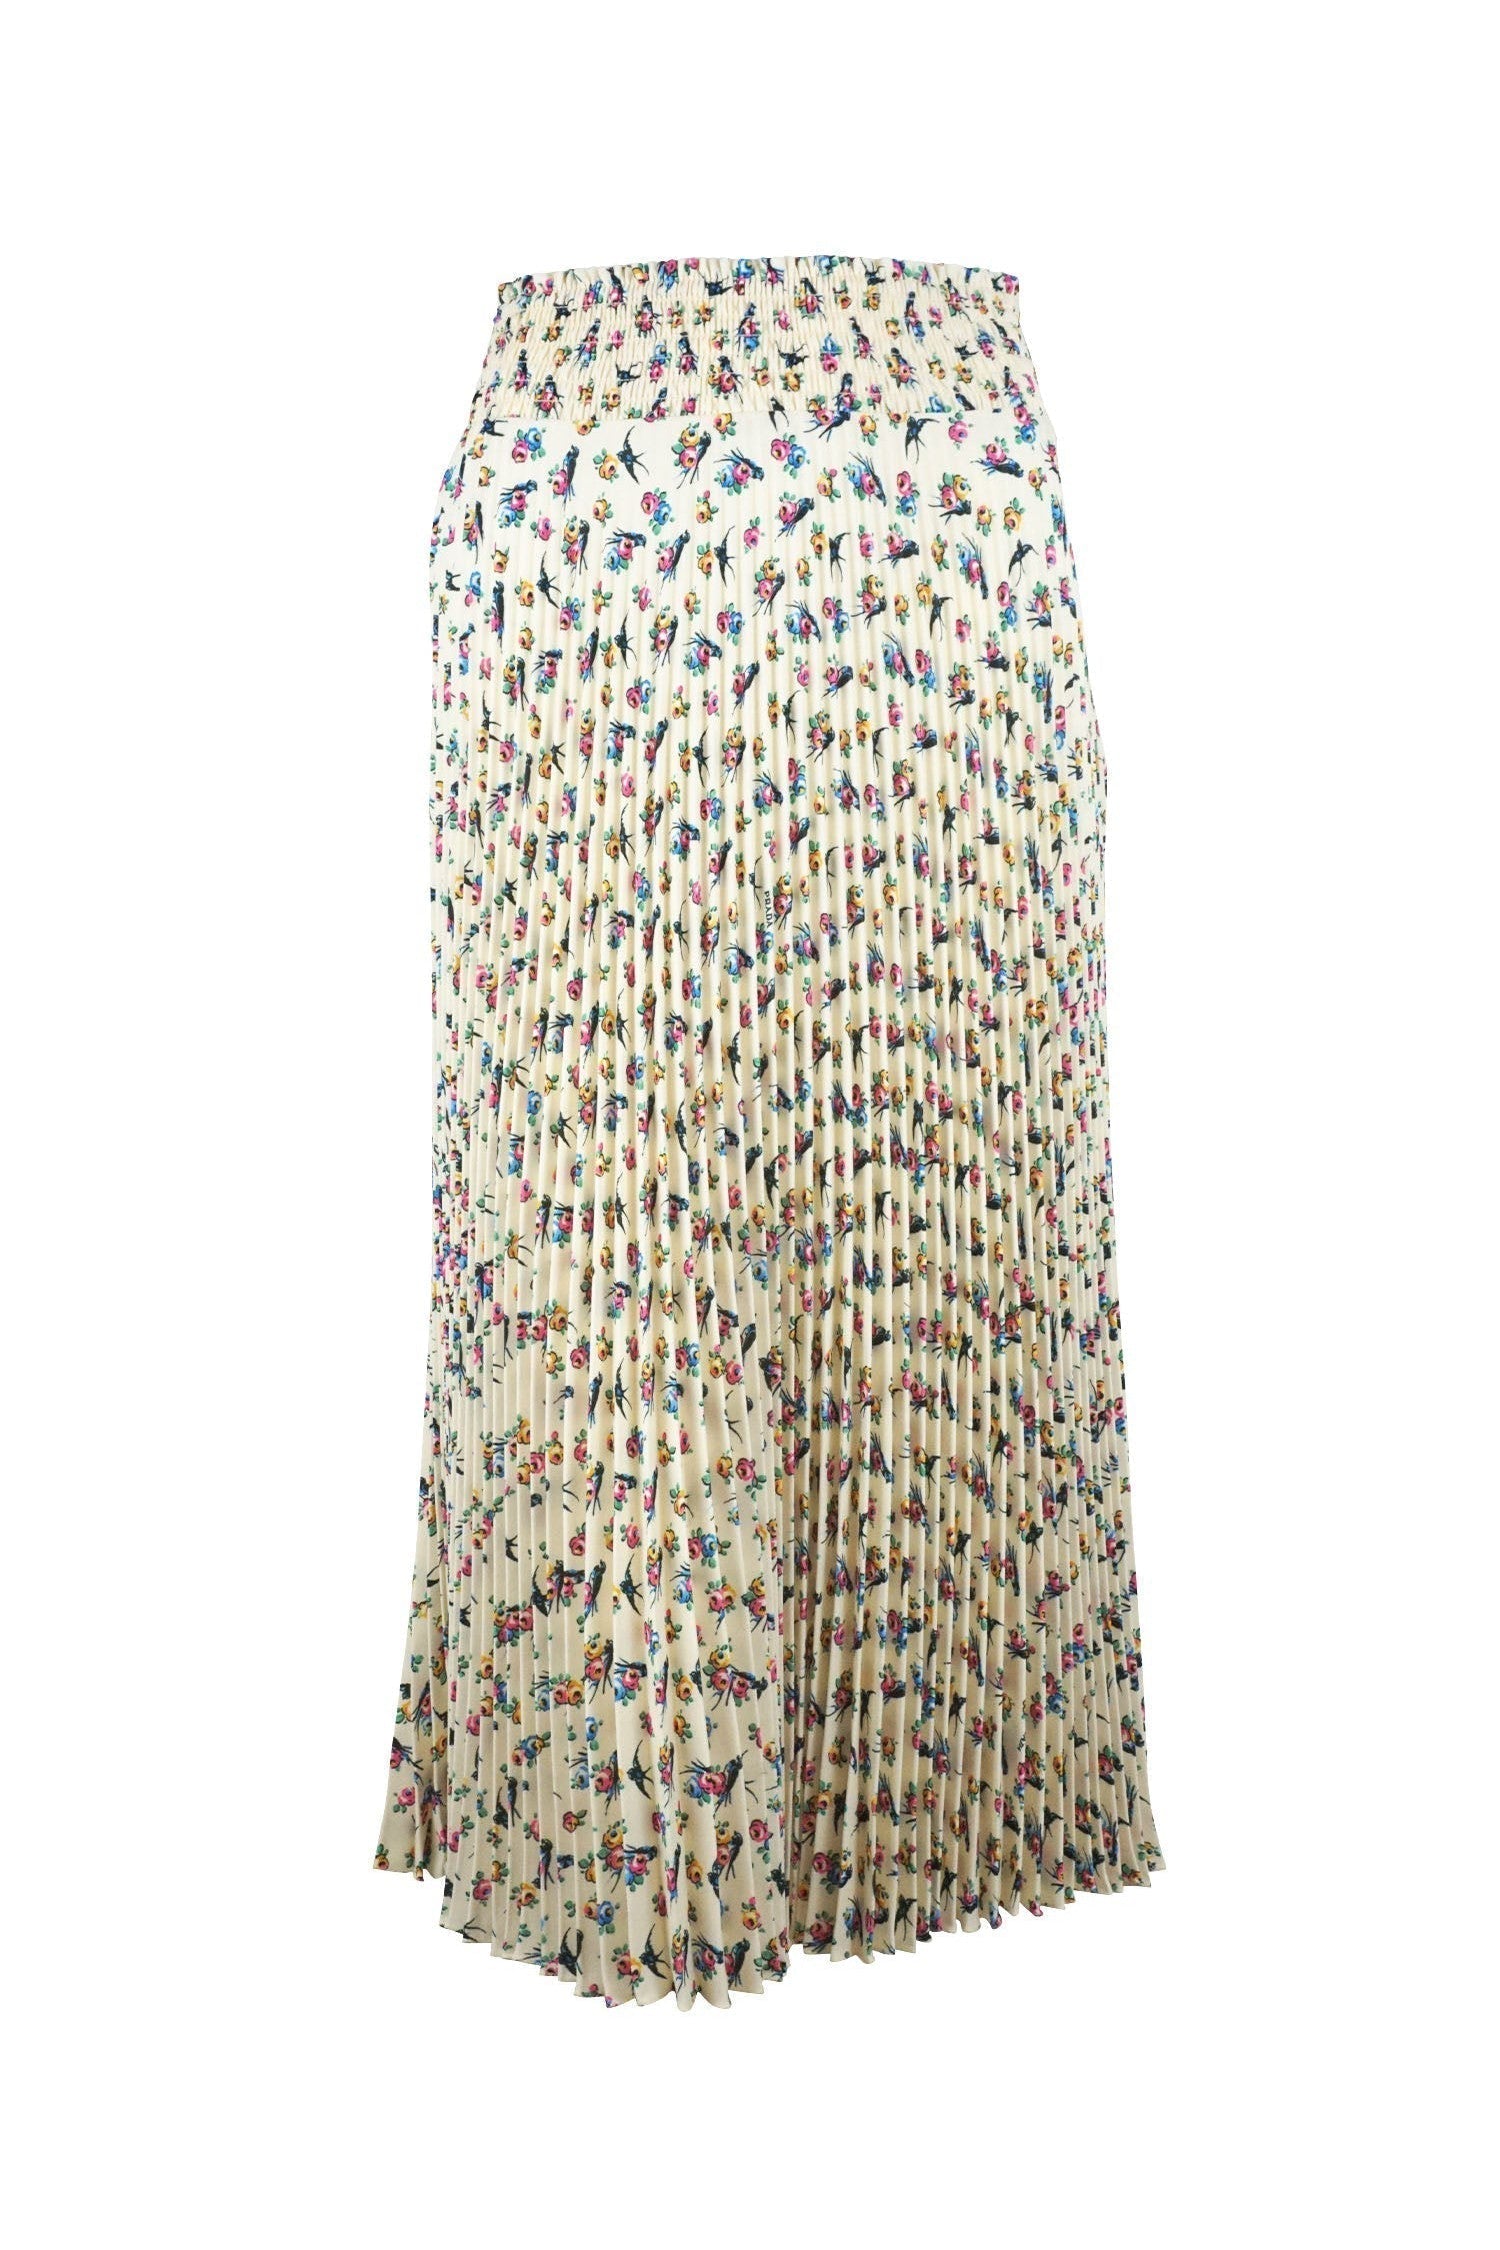 Prada Bird & Floral Print Pleated Skirt Size 40